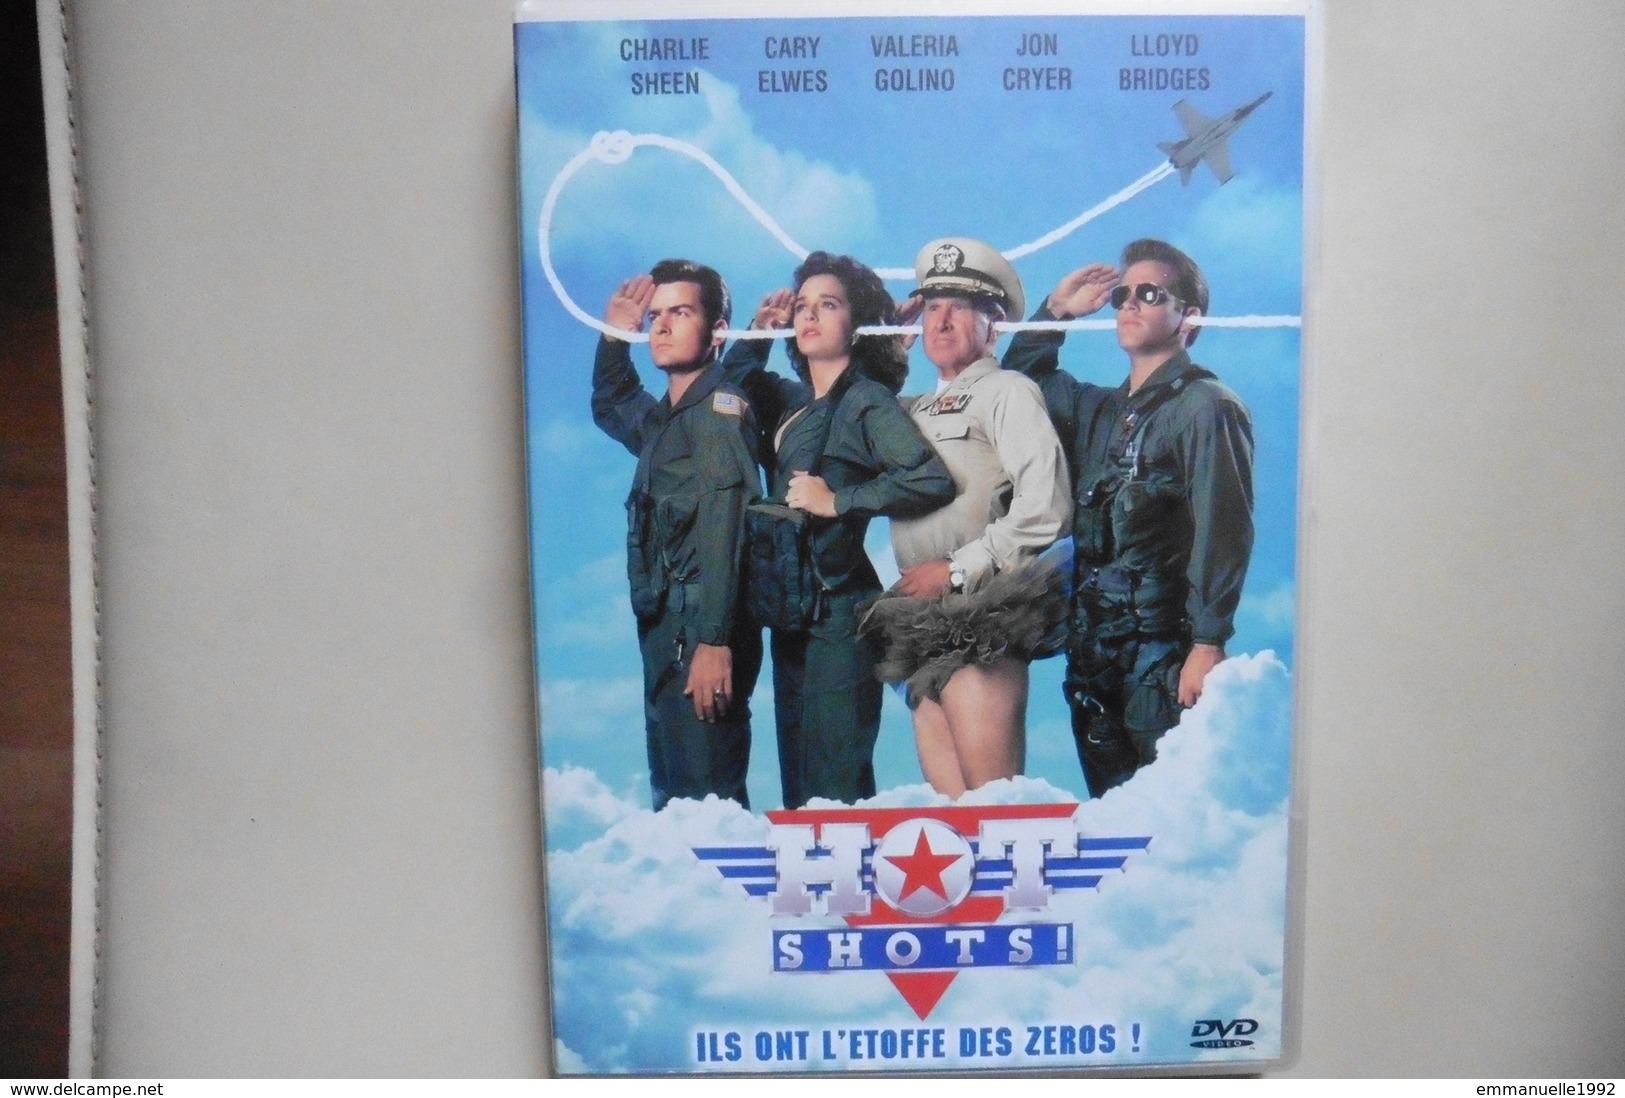 DVD Hot Shots ! Charlie Sheen Cary Elwes Valeria Golino - Tres Bon Etat - Comedy